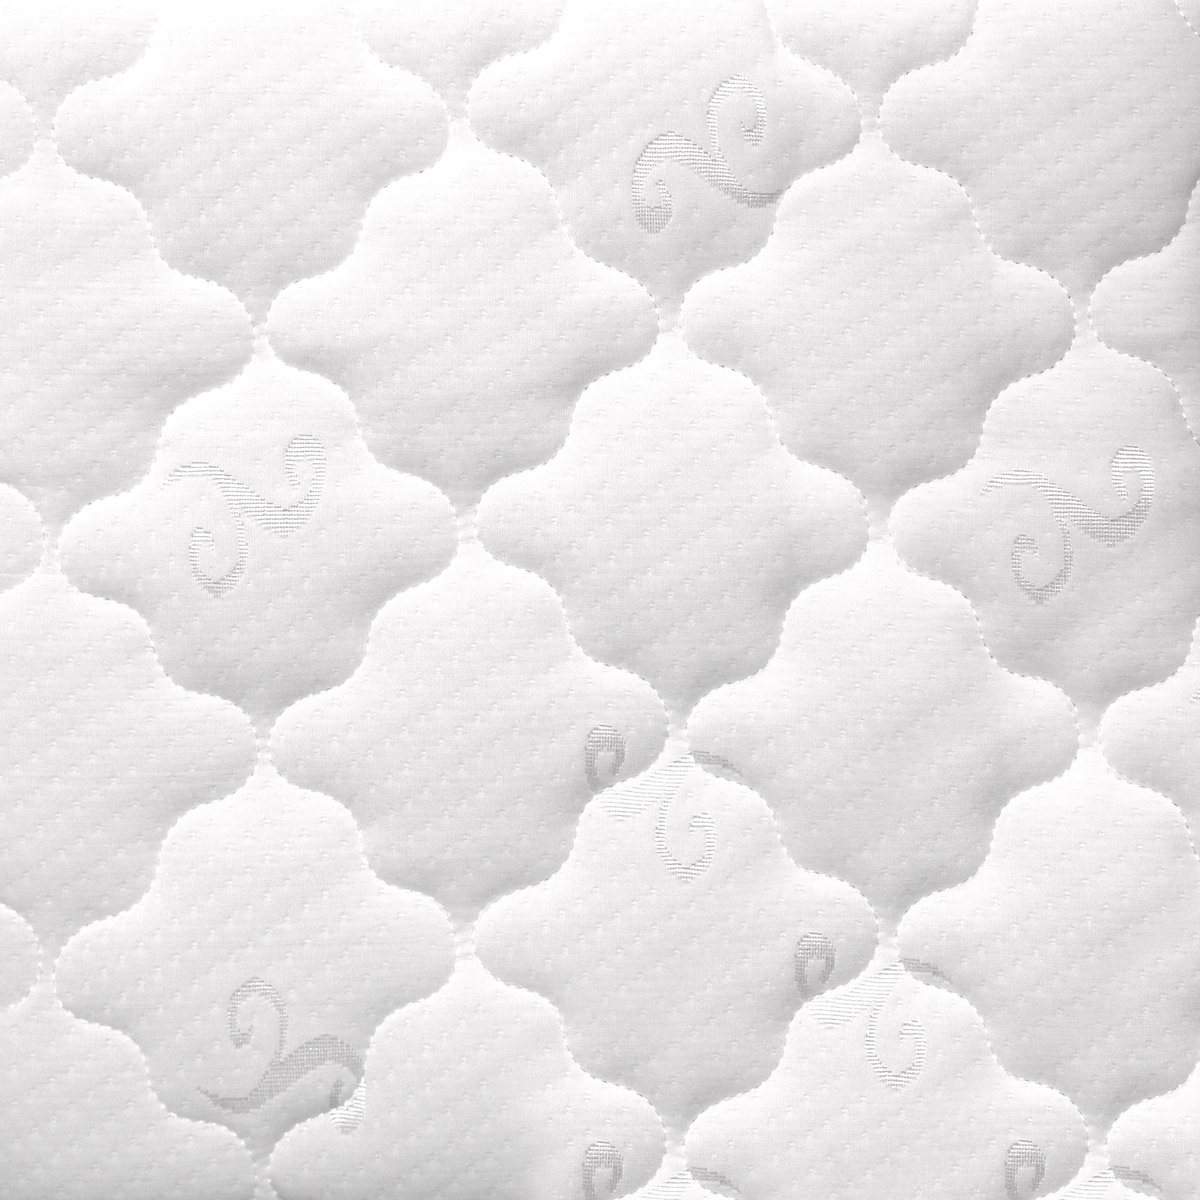 Cotton Home Fancy Bonel Spring Mattress 150x200+27cm-Pillow Top